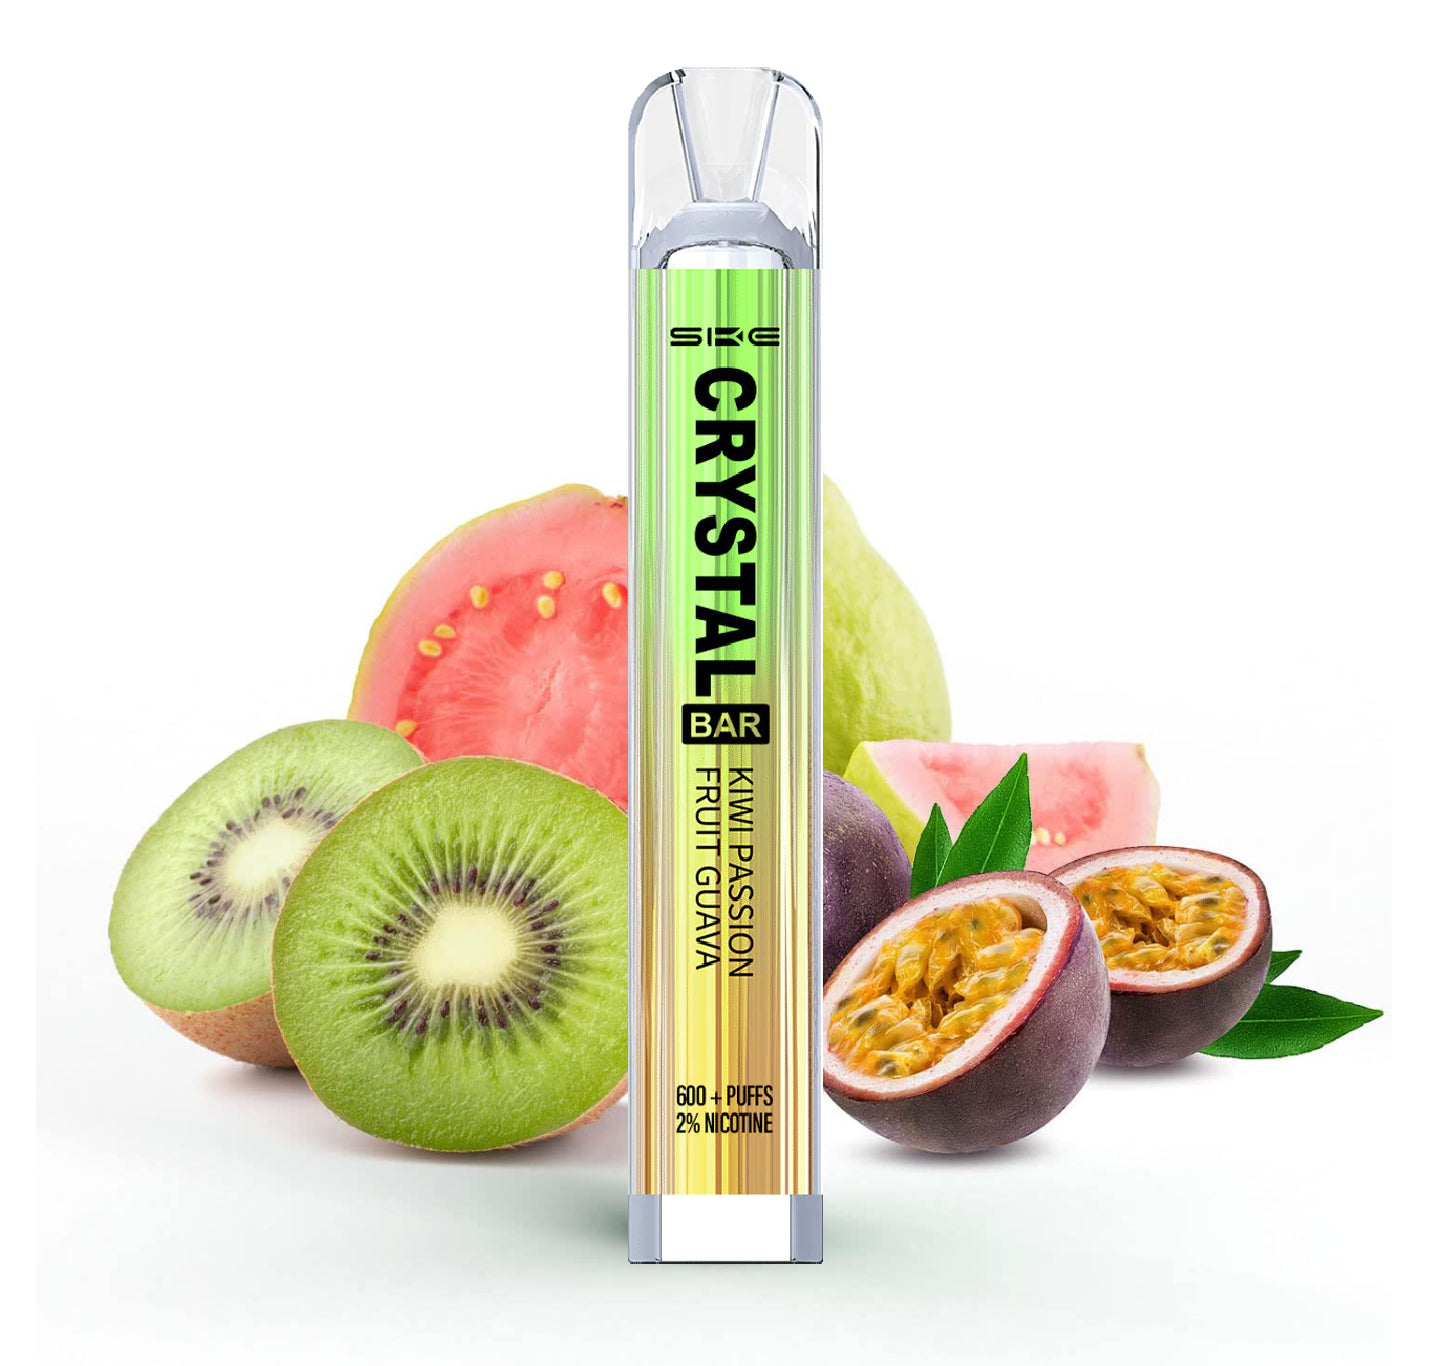 SKE Crystal Bar 2% Nicotine Disposable 600 Puffs Vape - Kiwi Passionfruit Guava